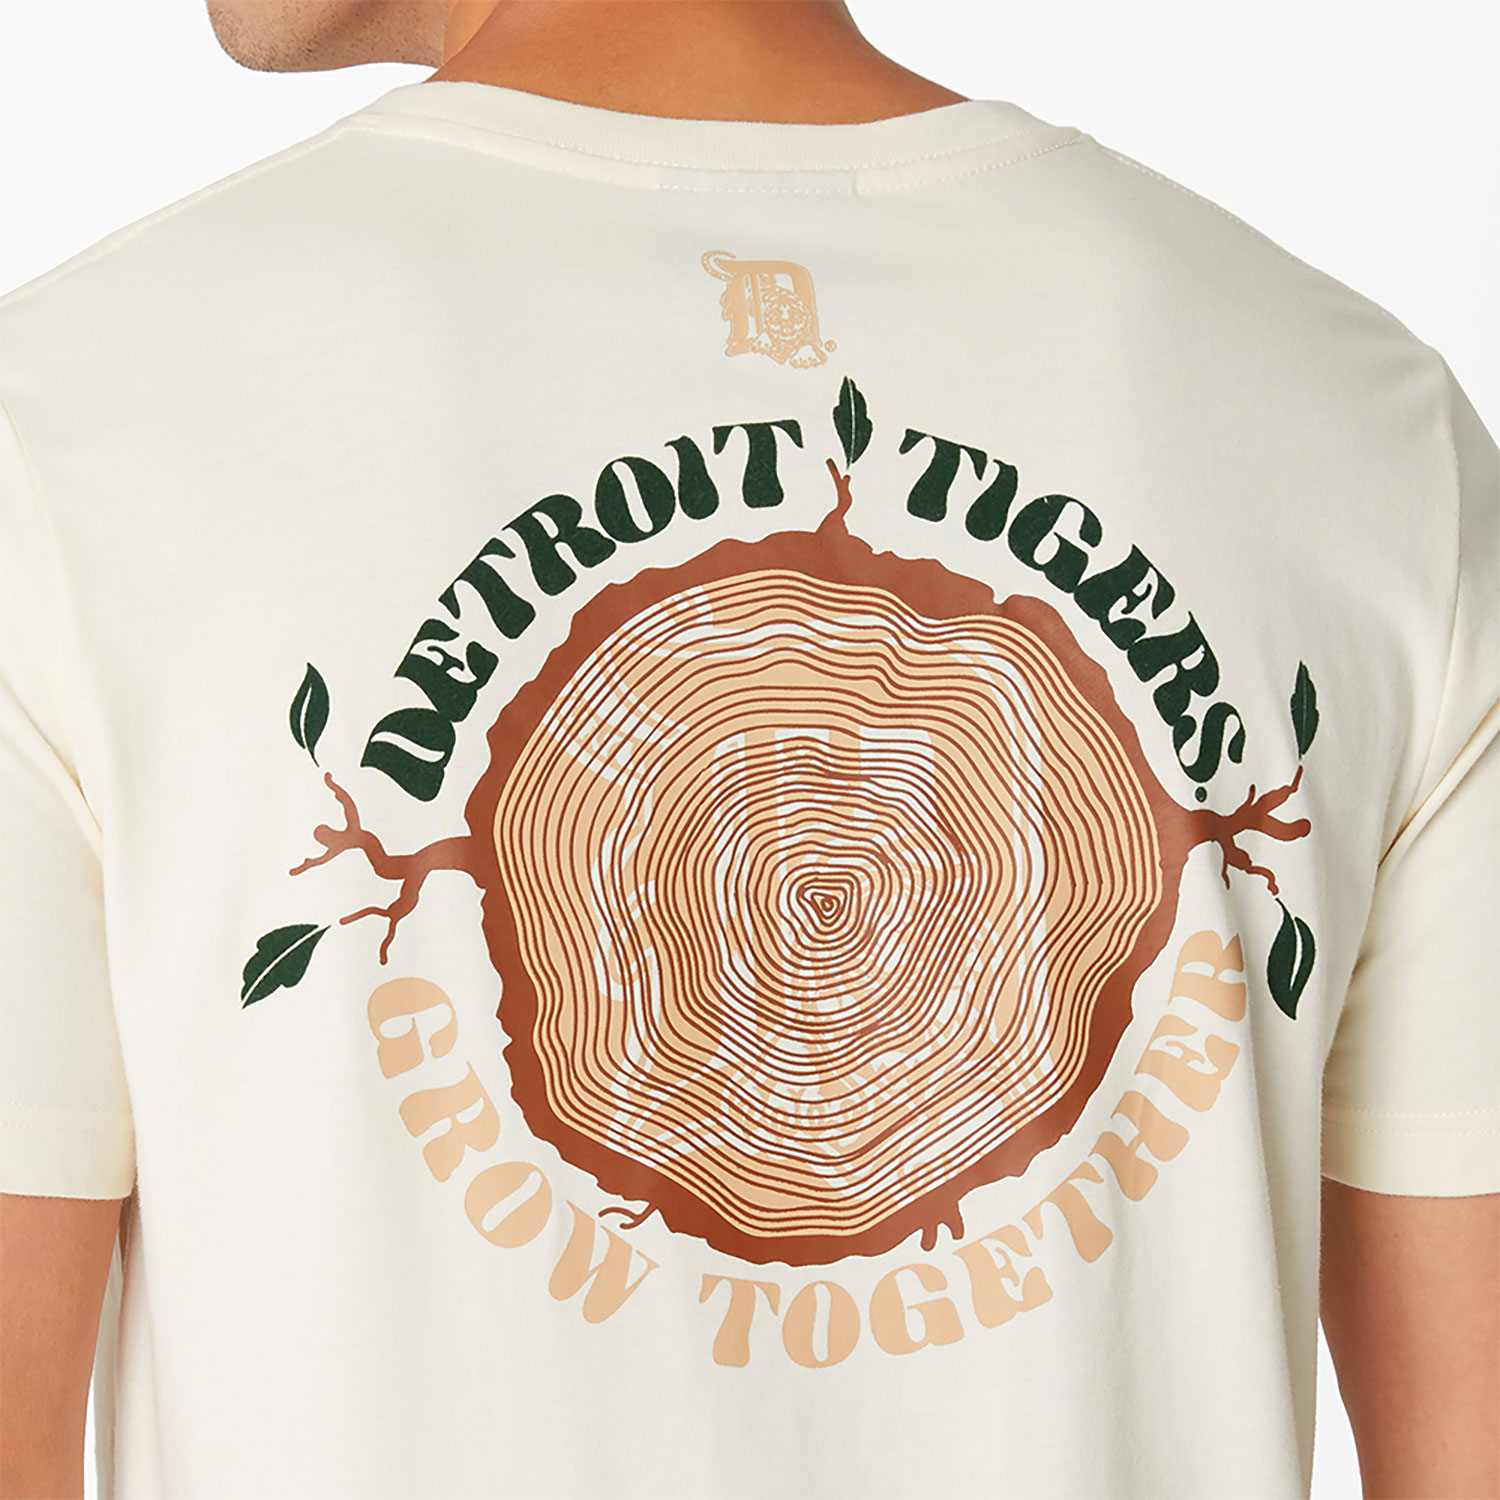 Detroit Tigers Camp White T-Shirt